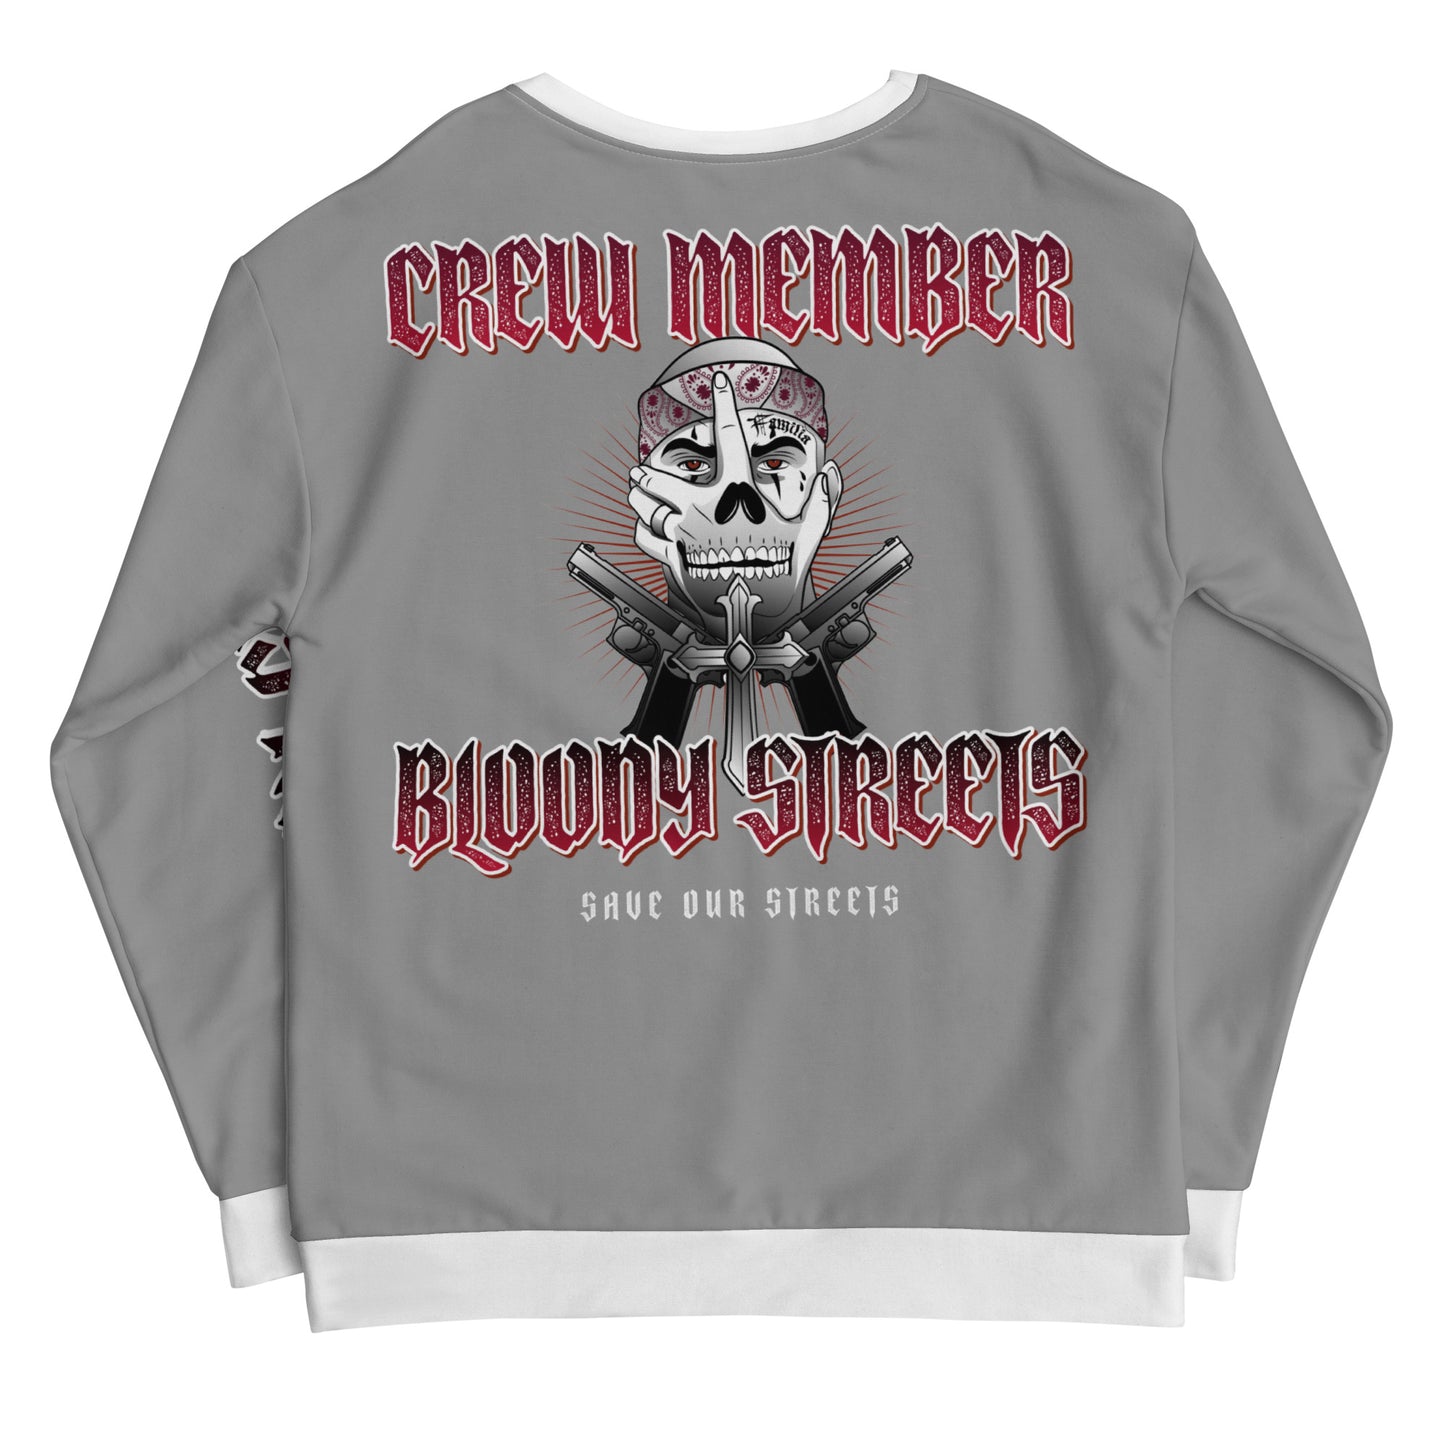 BLOODY STREETS Crew Member Streetwear Pullover Gray - BLOODY-STREETS.DE Streetwear Herren und Damen Hoodies, T-Shirts, Pullis